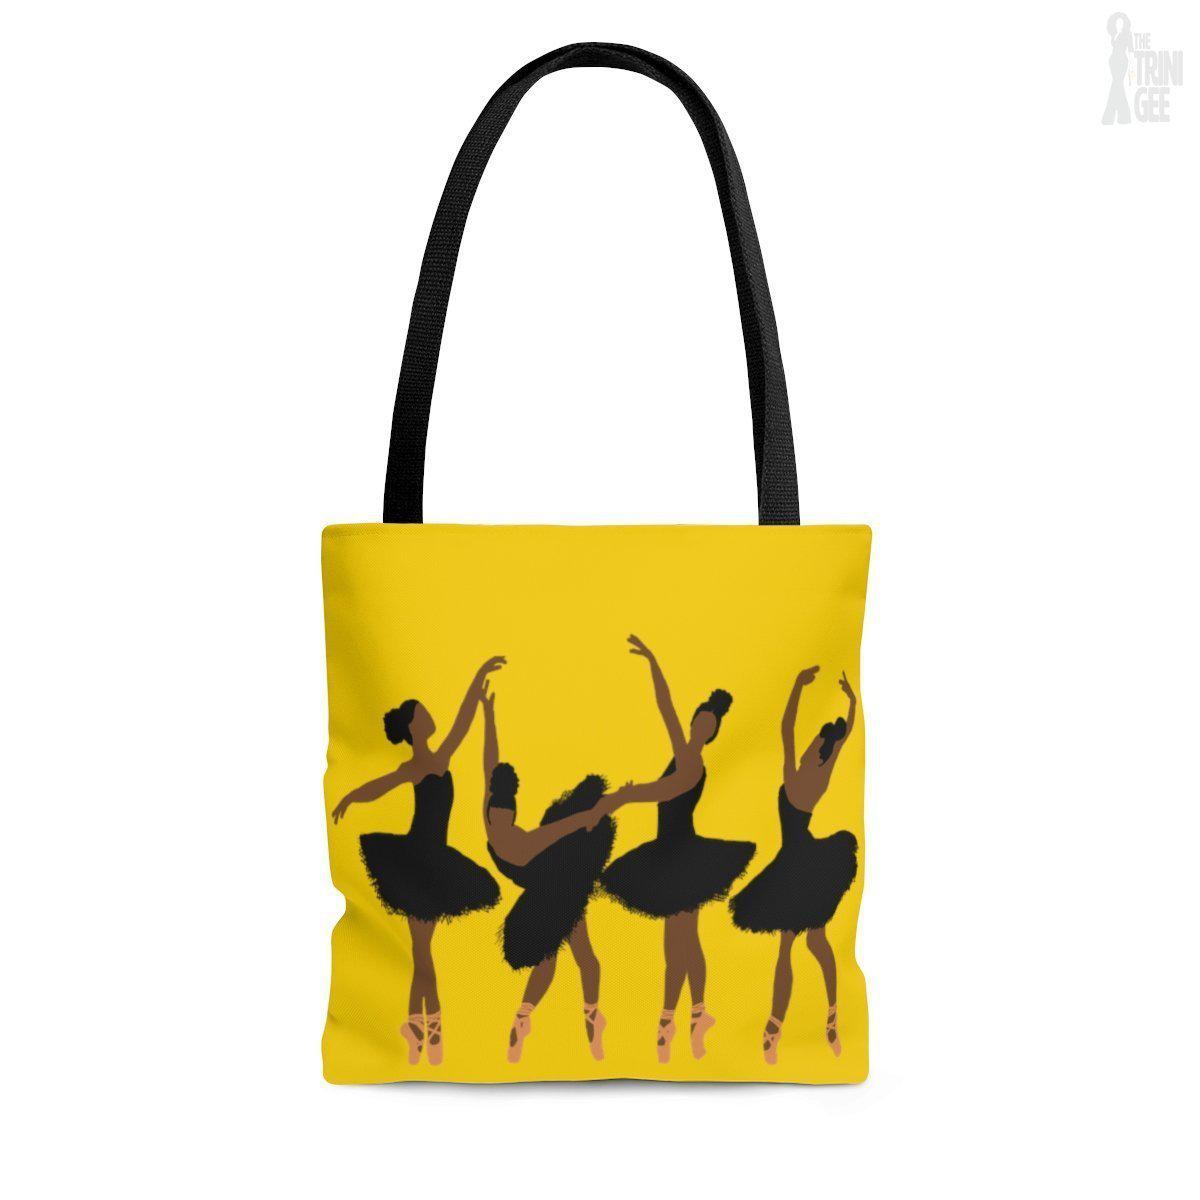 Black Ballerinas Tote Bag - The Trini Gee